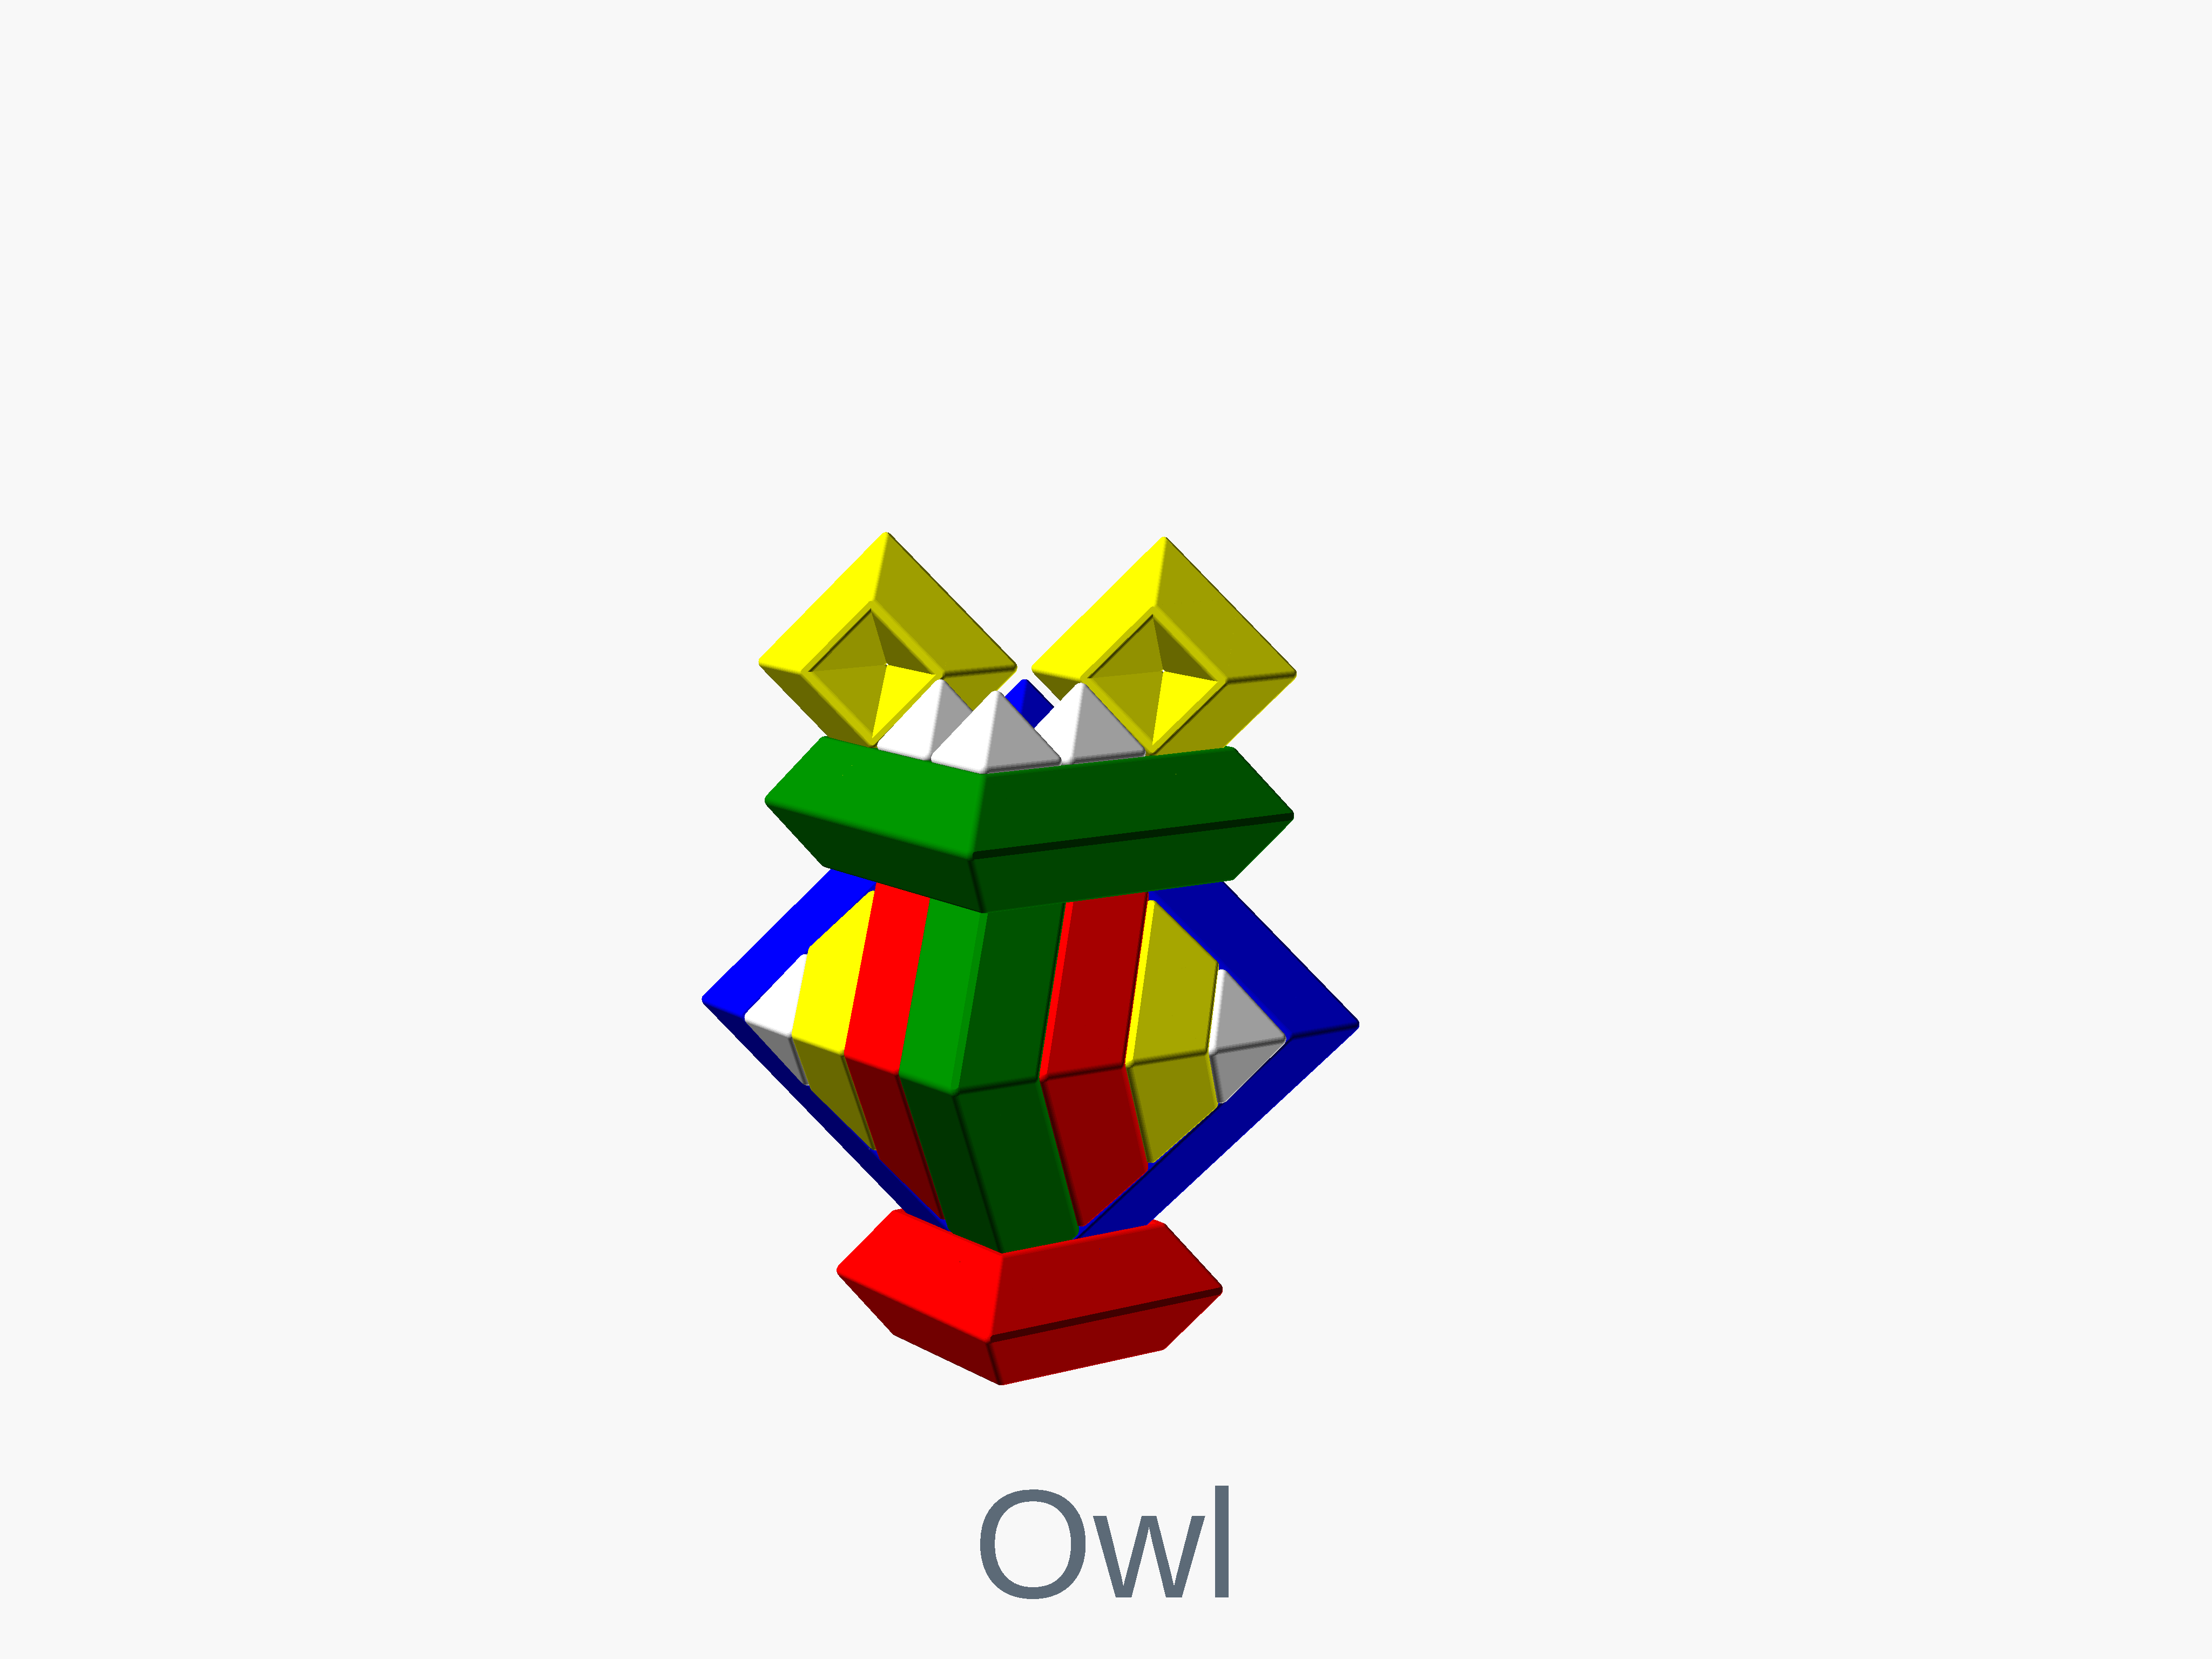 Octahedron owl